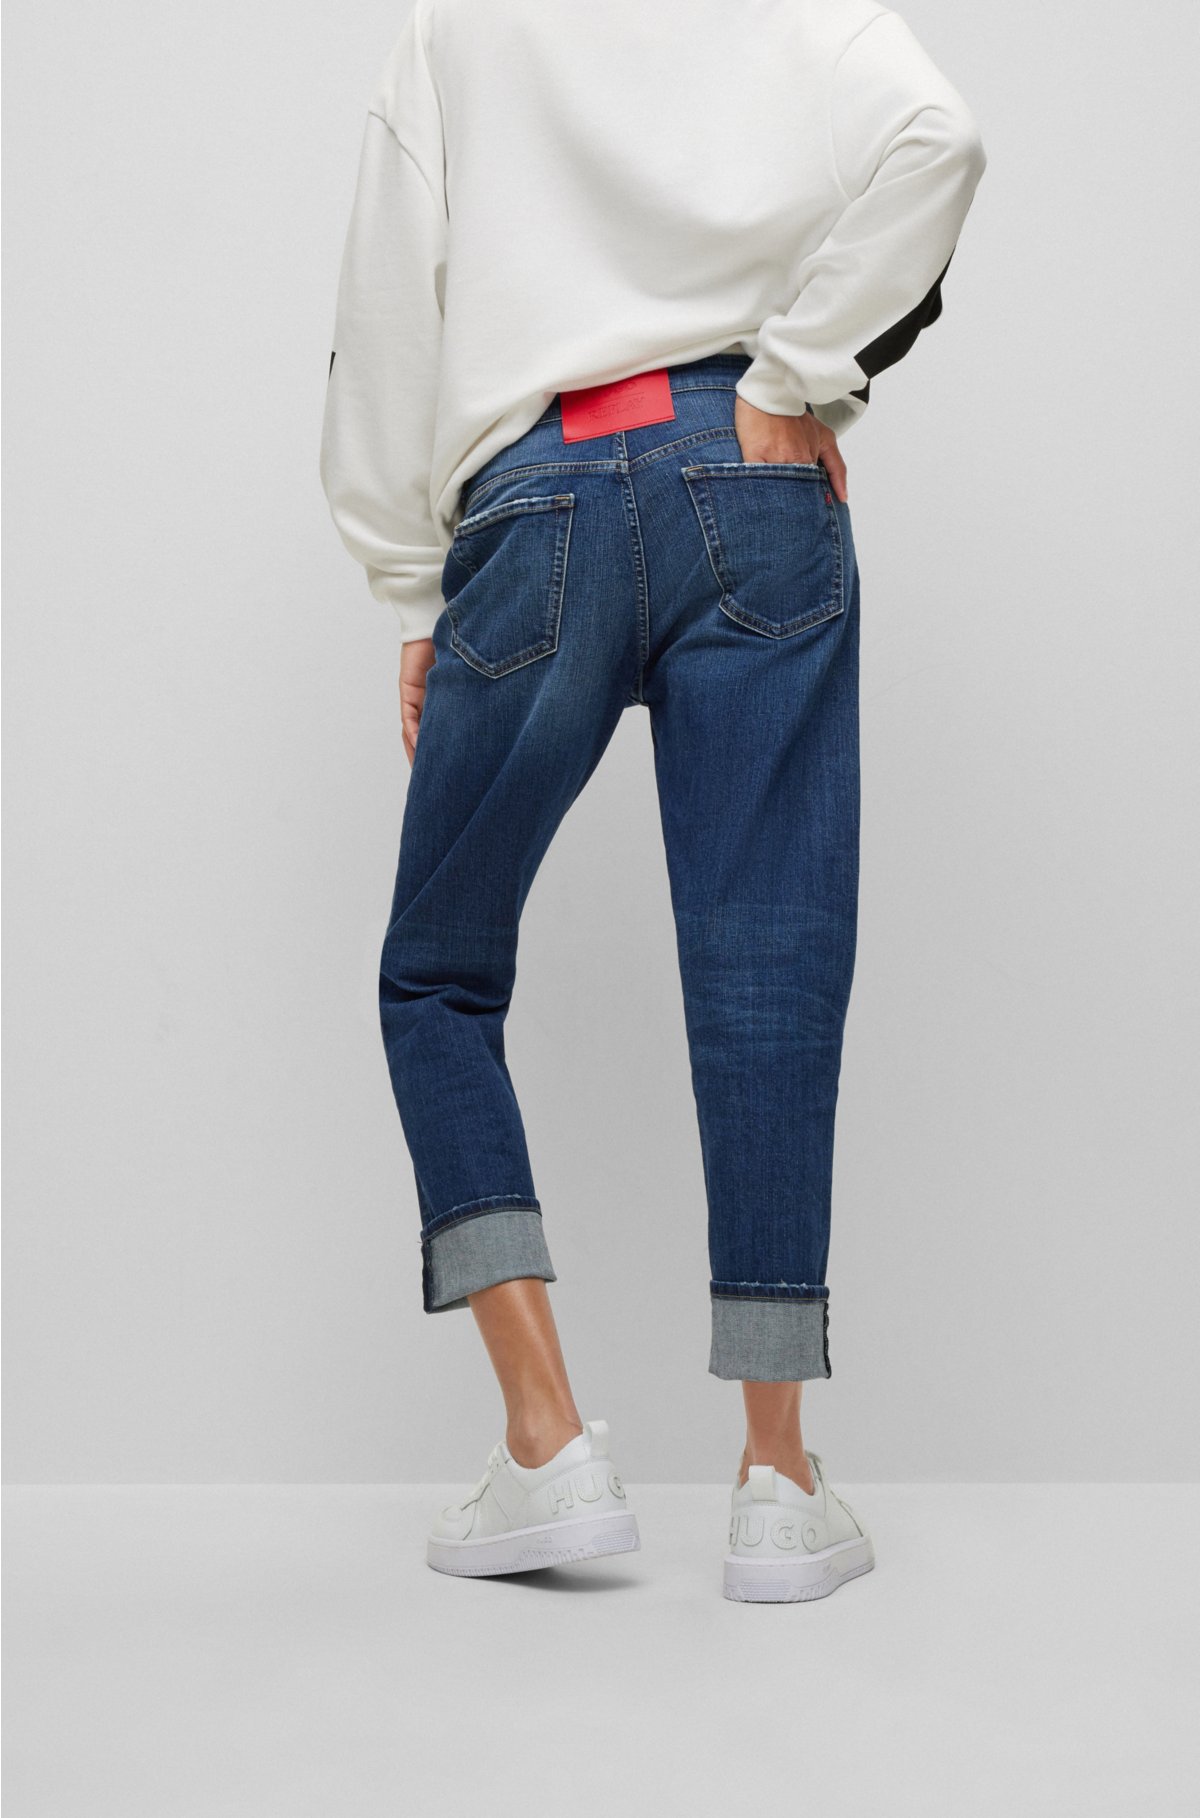 Beoefend Mok Amerika HUGO - HUGO | REPLAY regular-fit jeans in dark-blue stretch denim